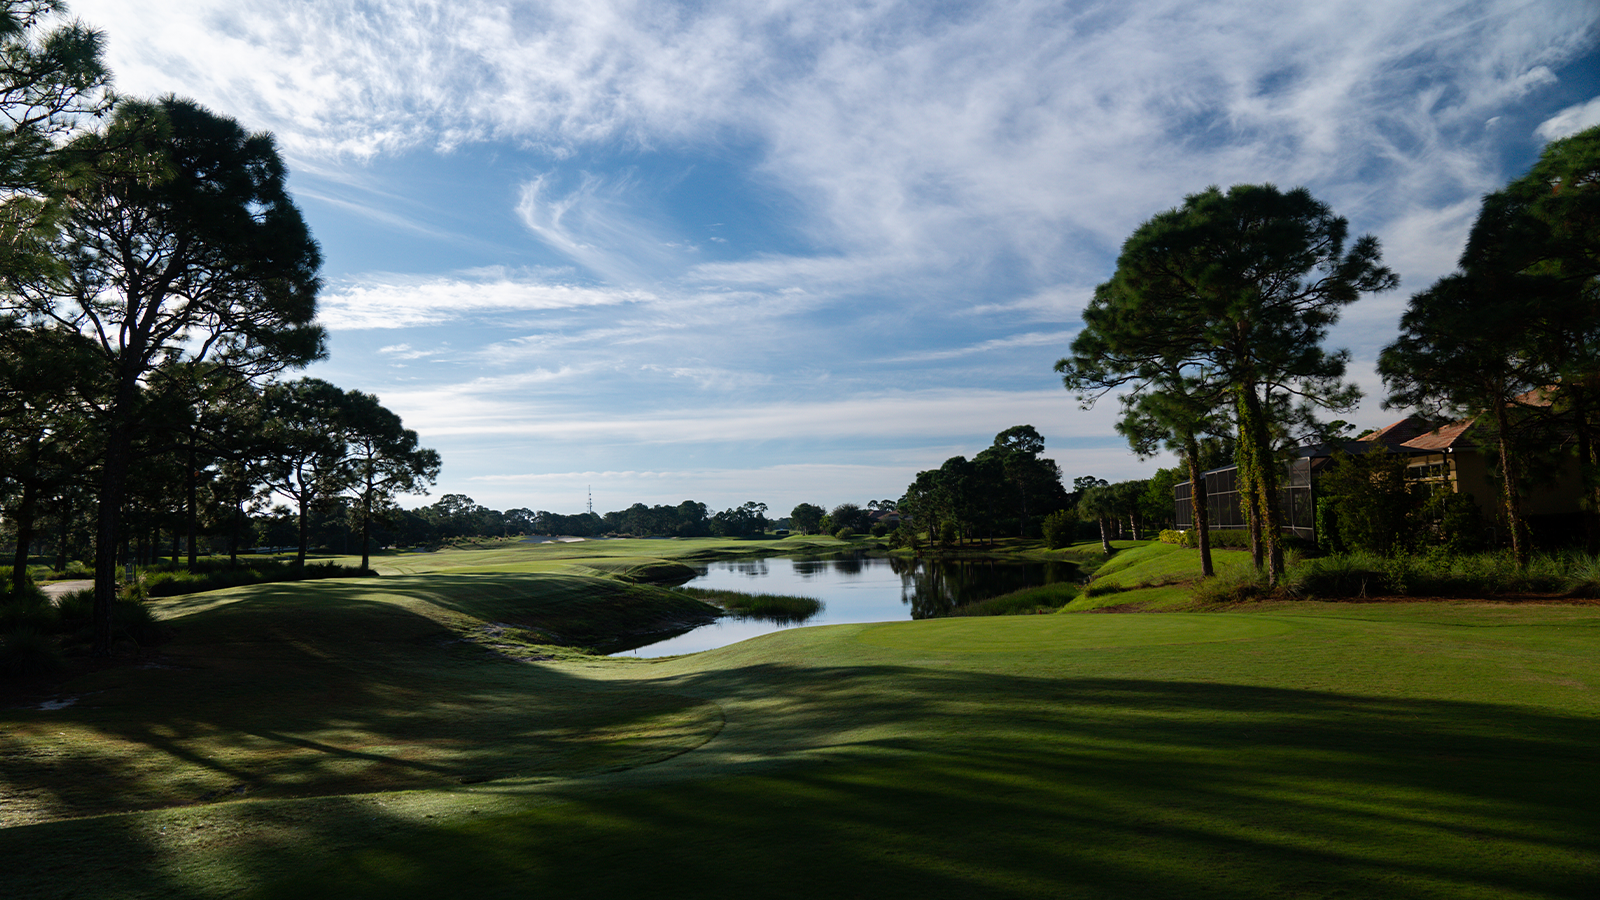 PGA Golf Club on November 14, 2021 in Port St. Lucie, Florida. (Photo by Hailey Garrett/PGA of America)